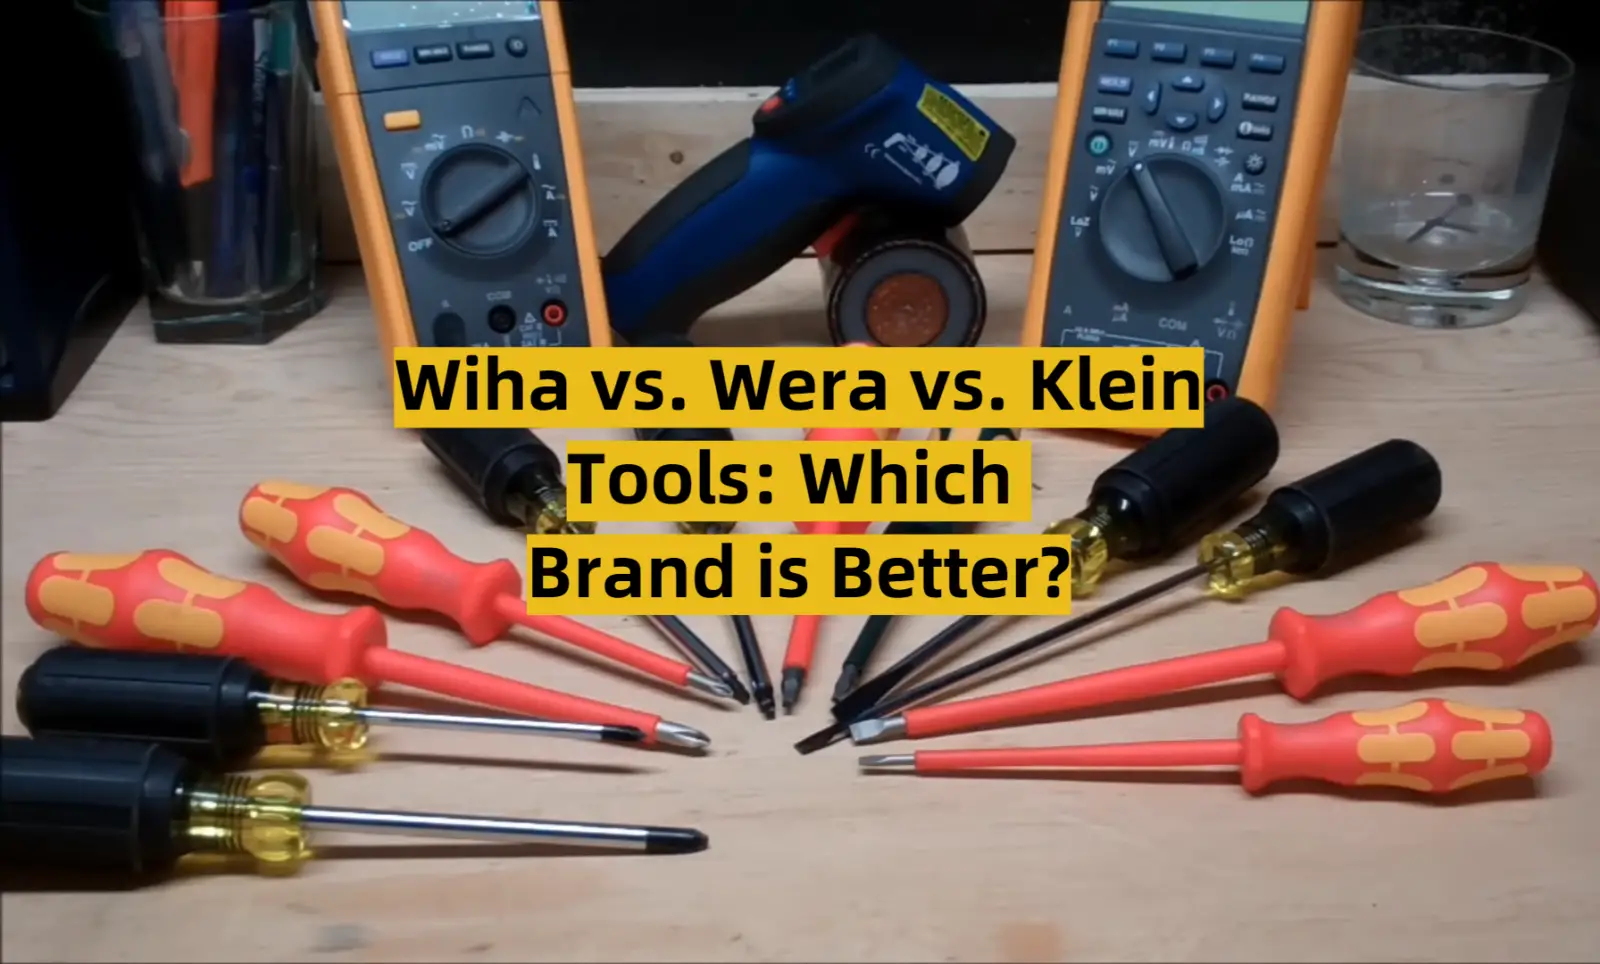 Wiha vs. Wera vs. Klein Tools: Which Brand is Better?